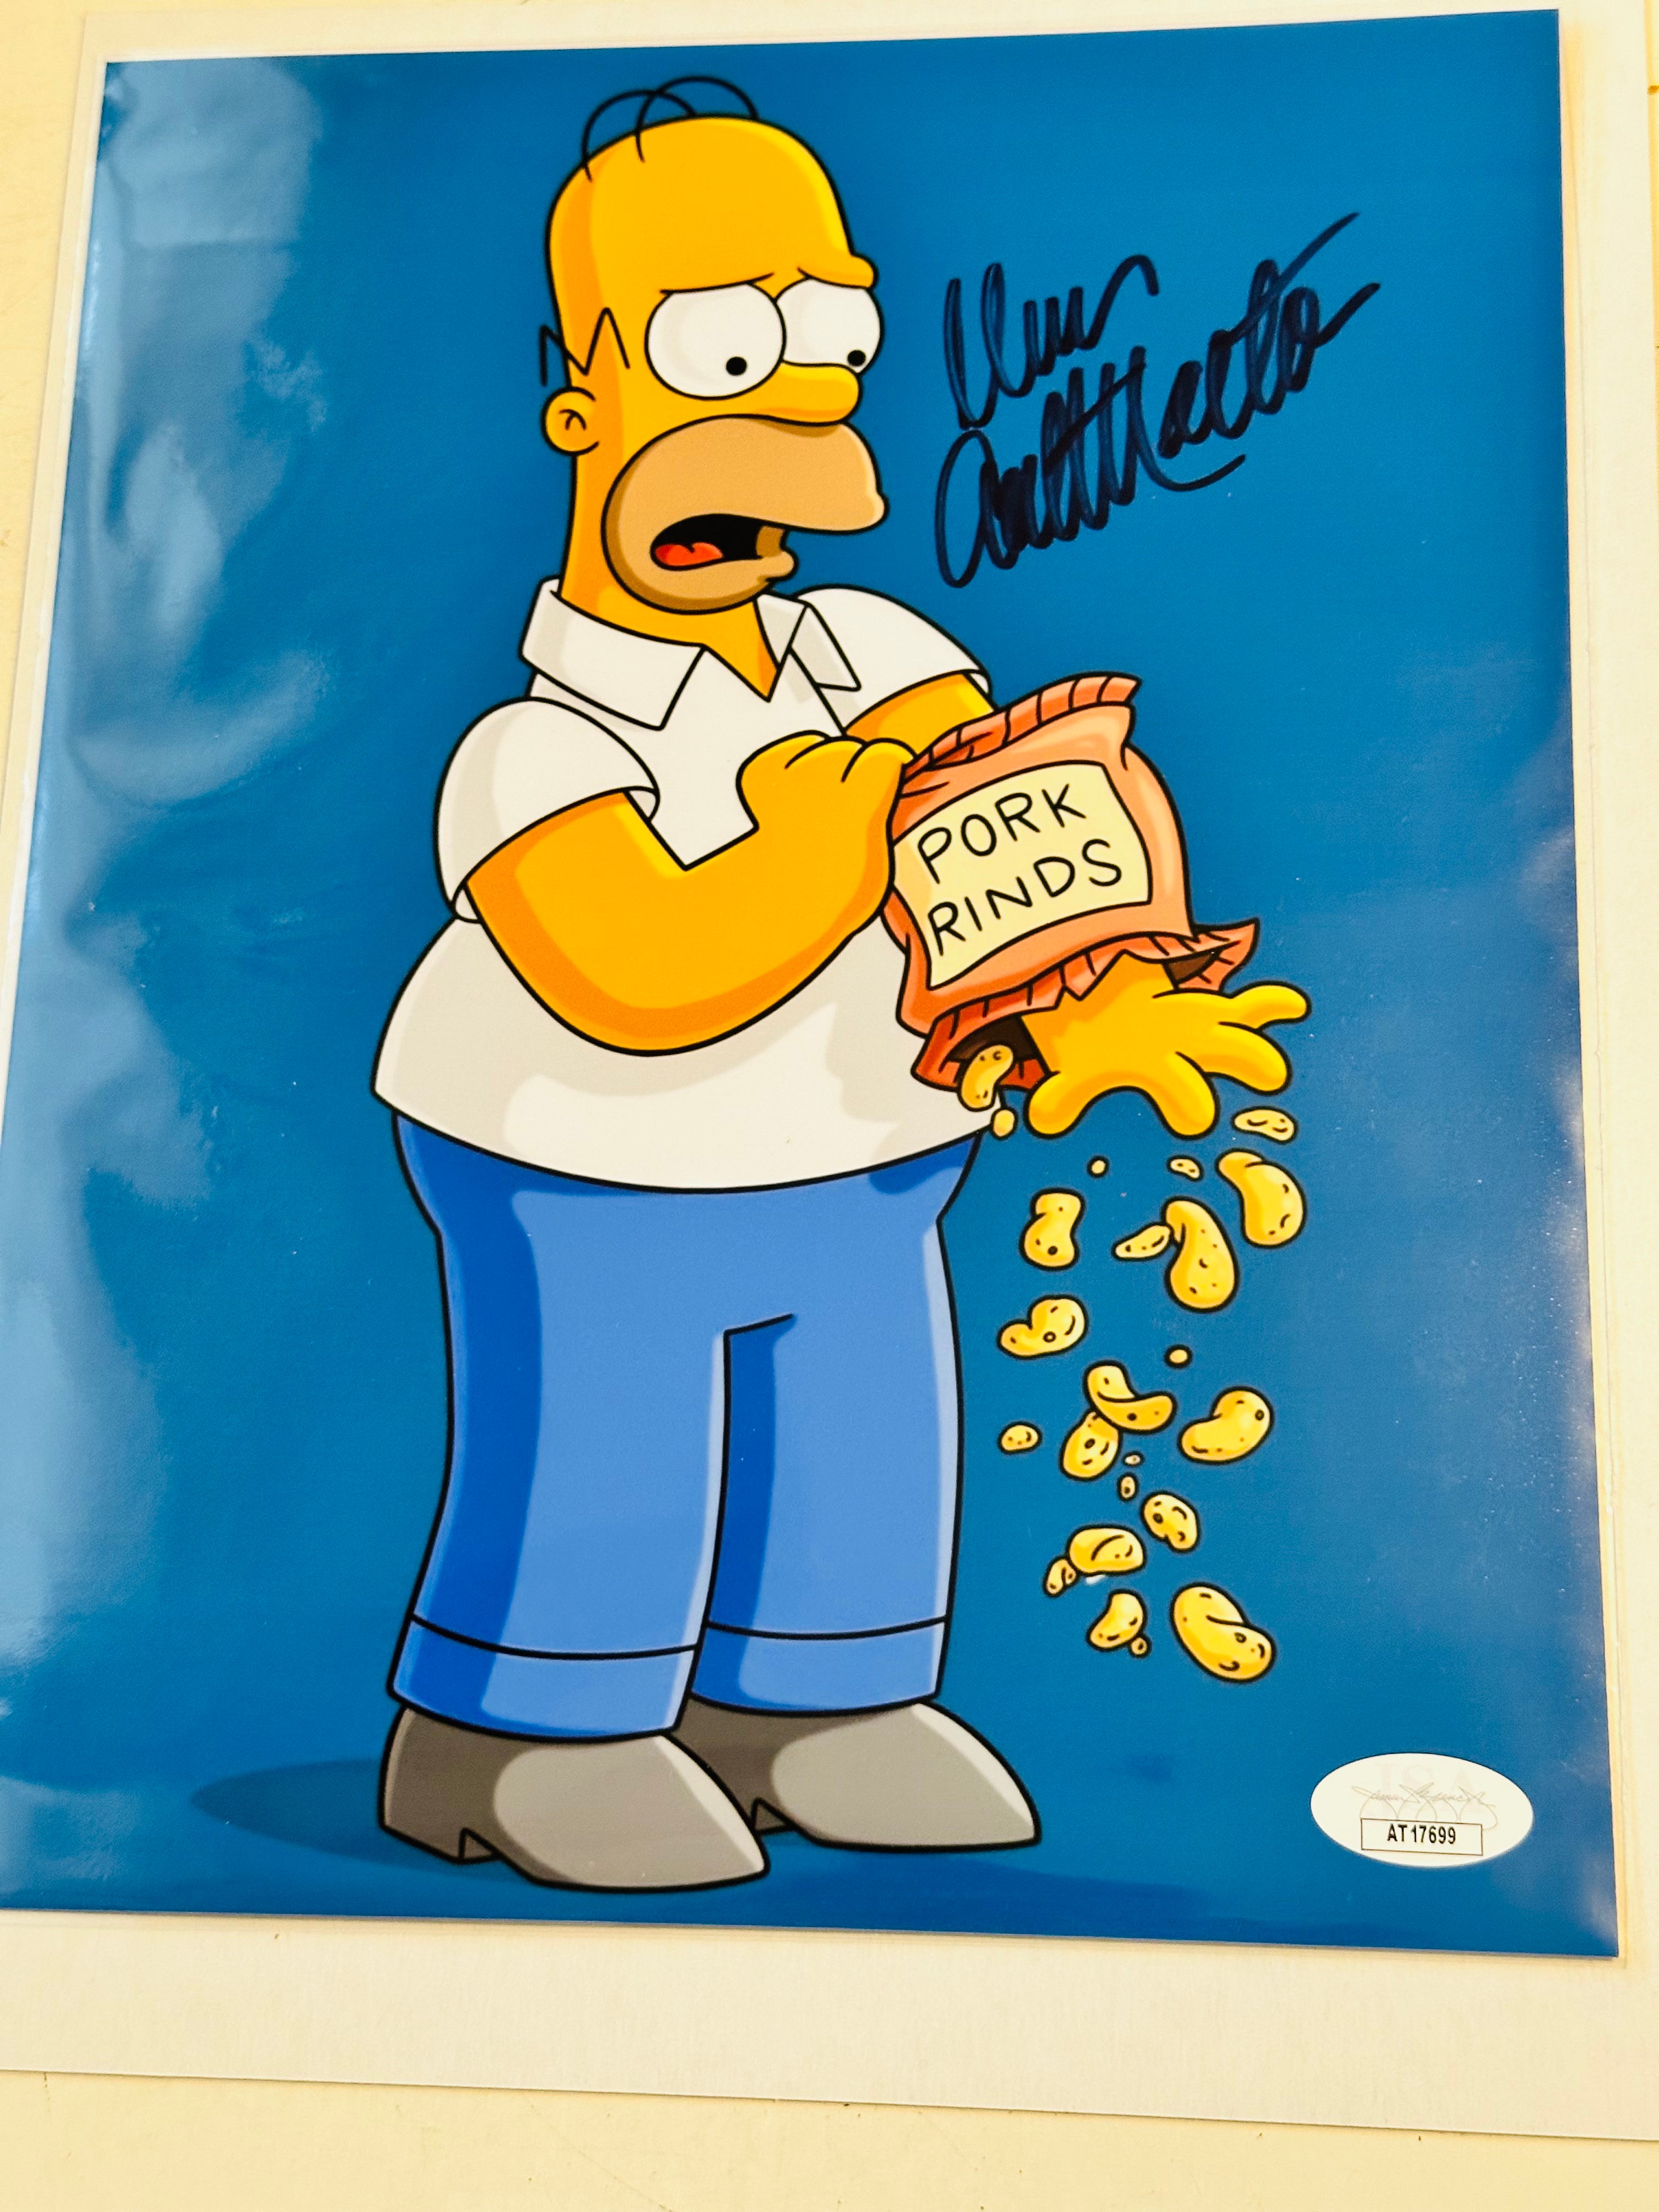 The Simpsons Dan Castellaneta voice of Homer Simpson 8x10 autograph certified by JSA